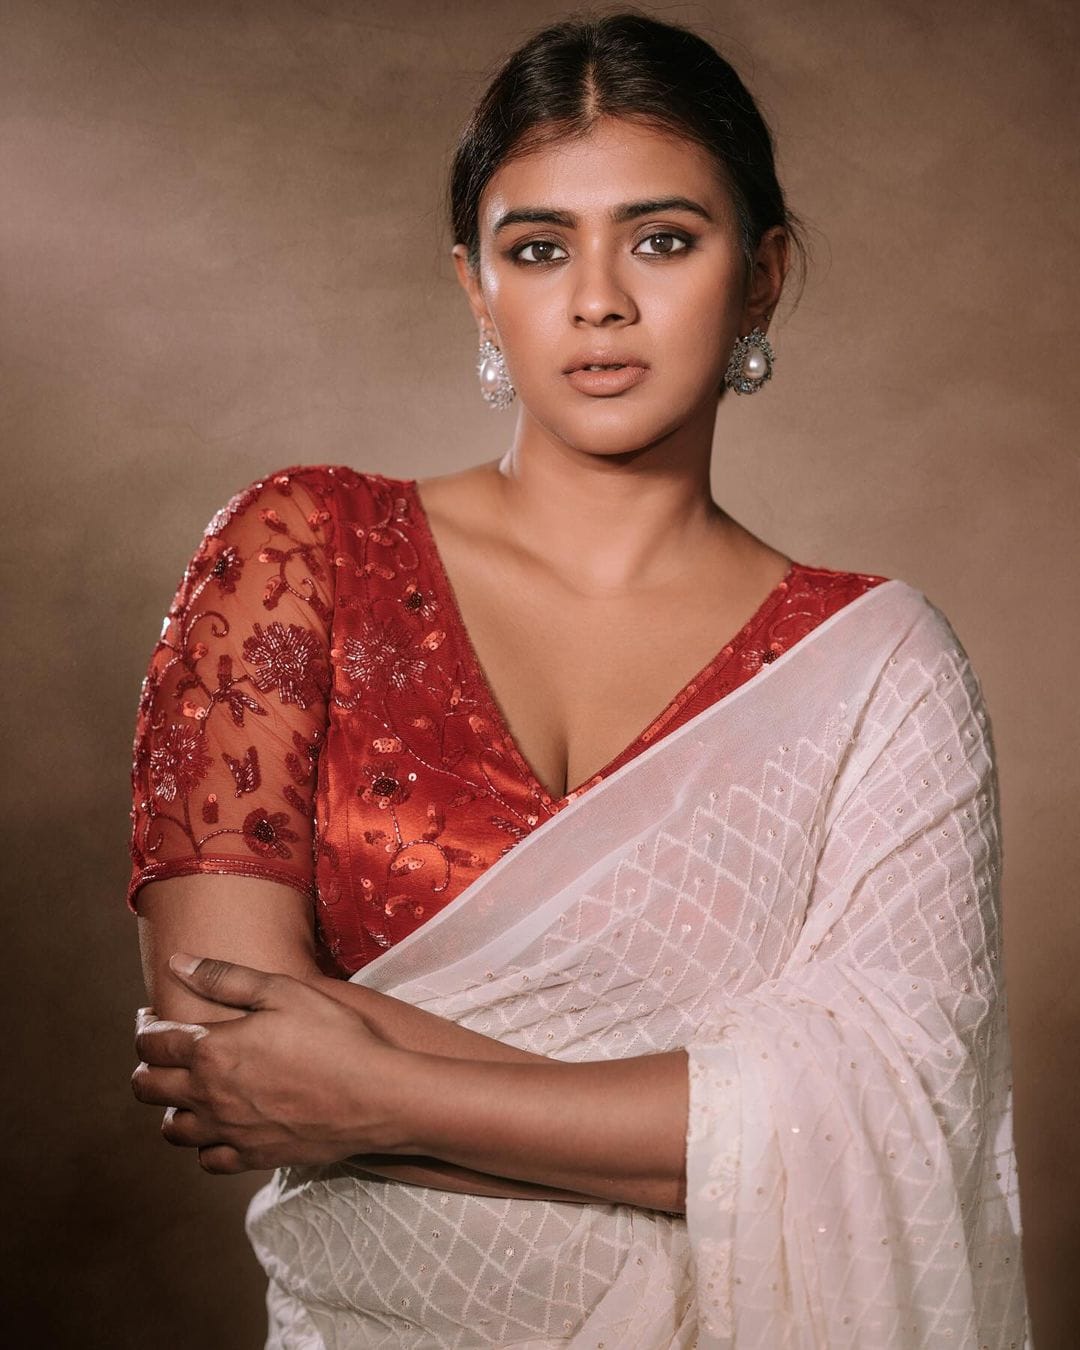 Mesmerising looks of Hebba Patel in saree